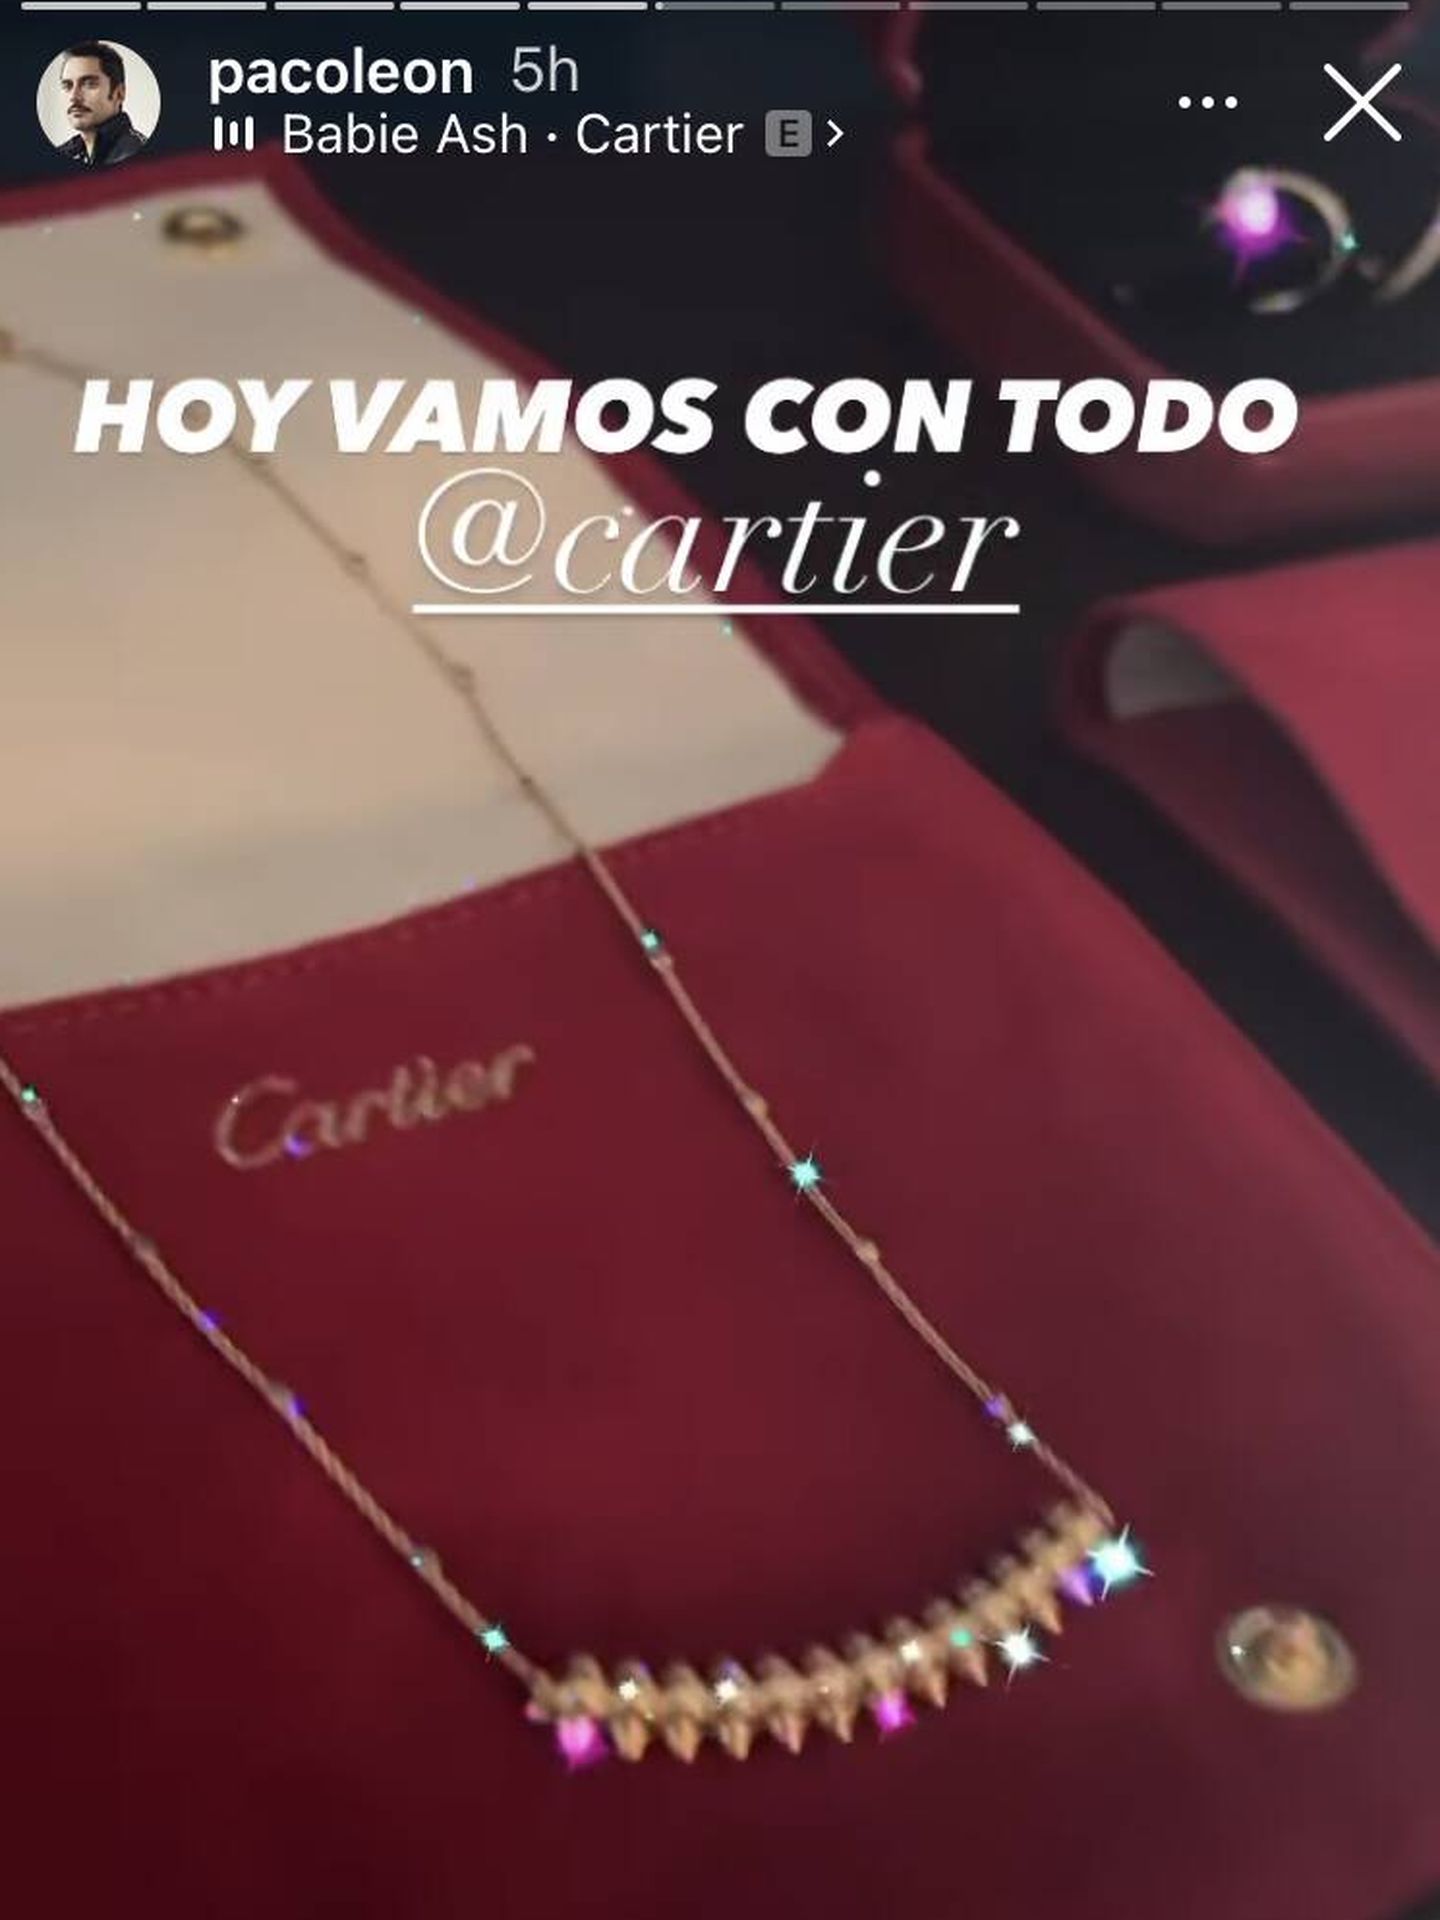 Joyas de Cartier. (Via stories @pacoleon)